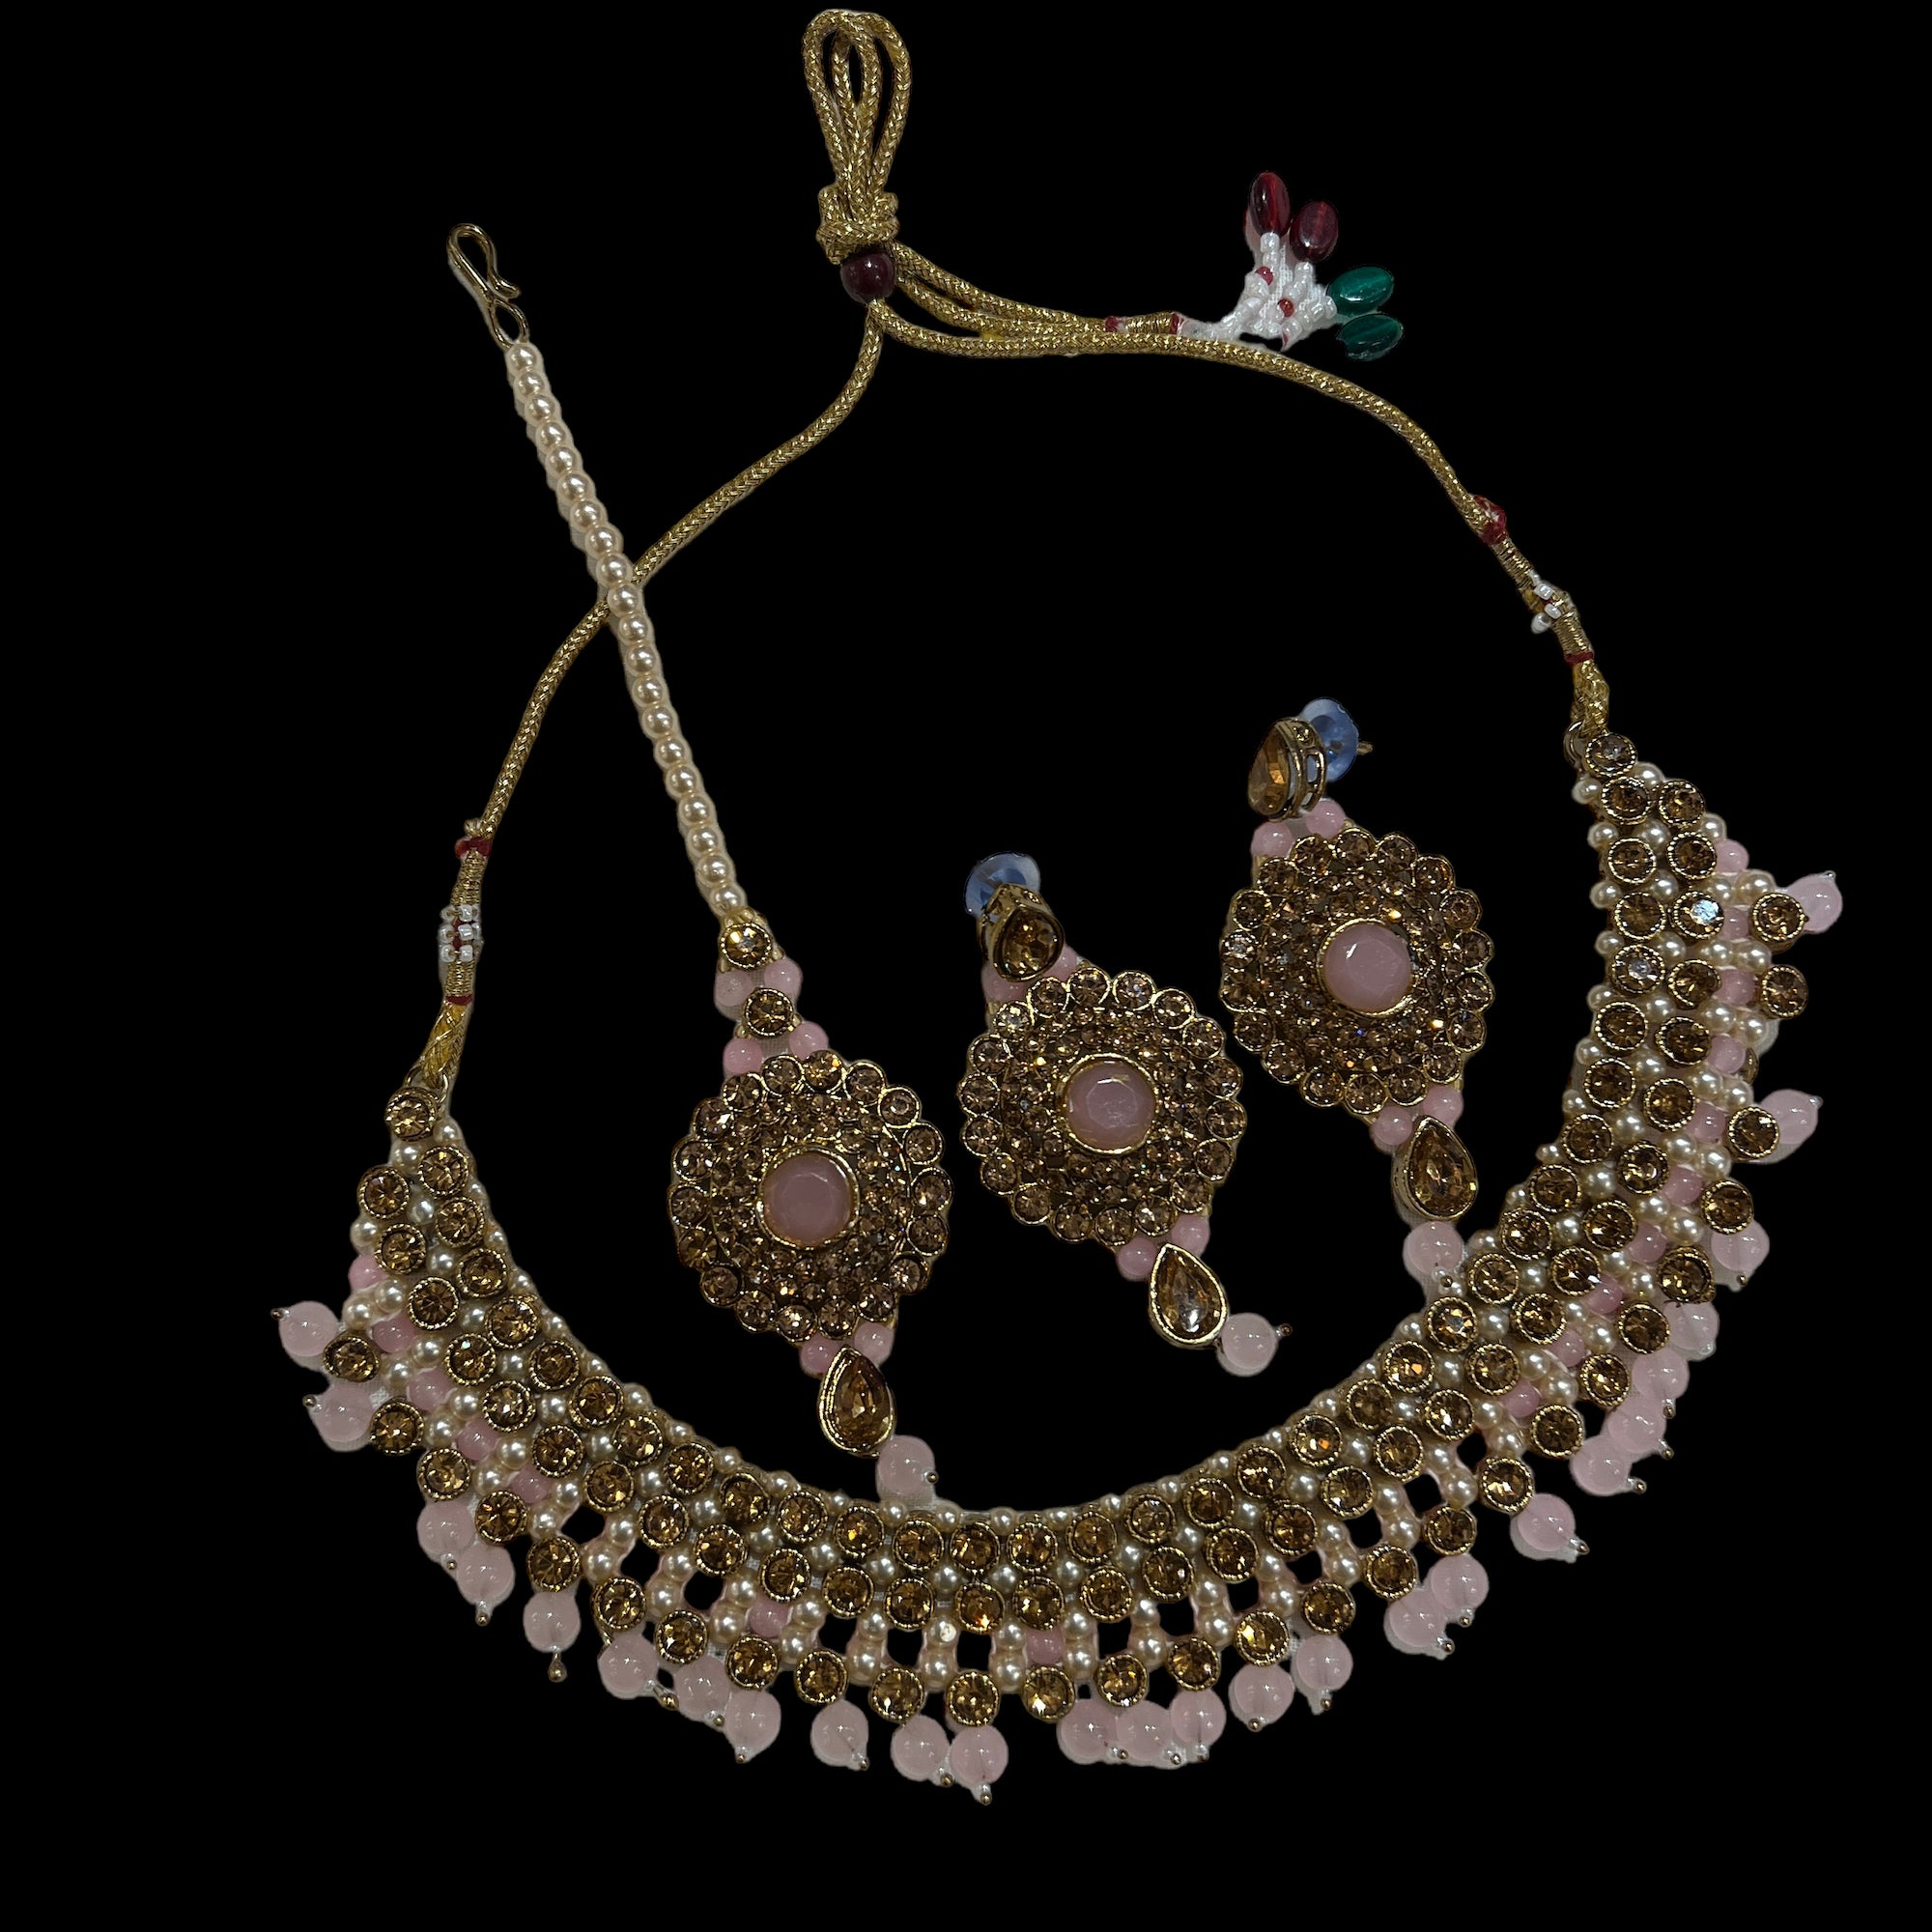 DT Flower Necklace Sets-11 Colors - Vintage India NYC